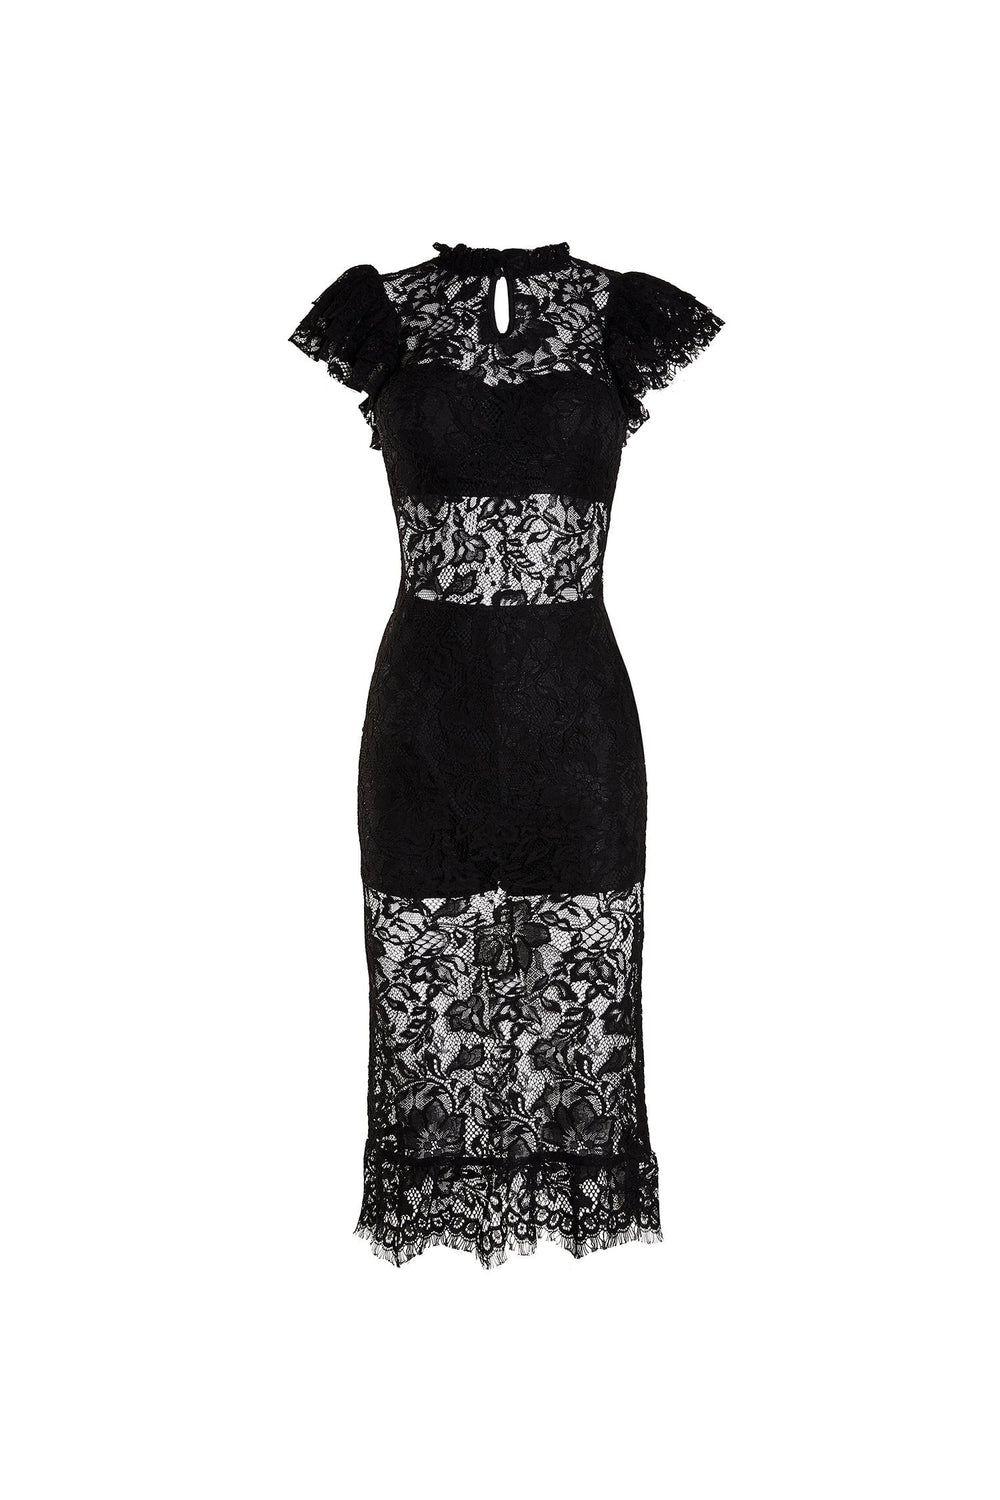 Francine Sheer Black Lace Midi Dress